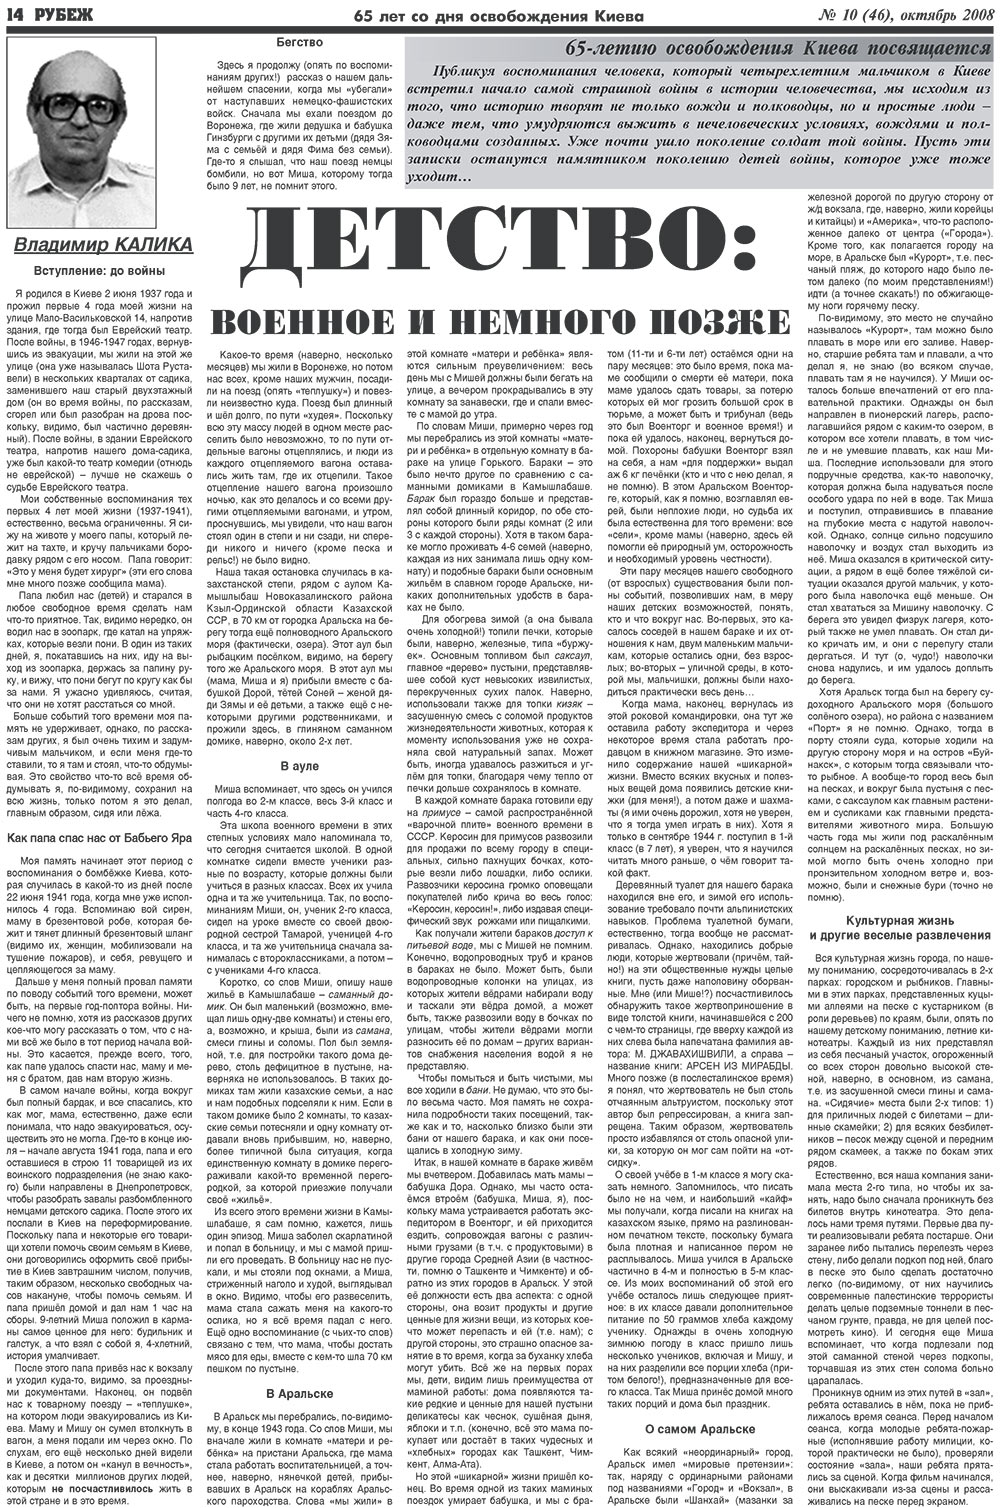 Рубеж, газета. 2008 №10 стр.14